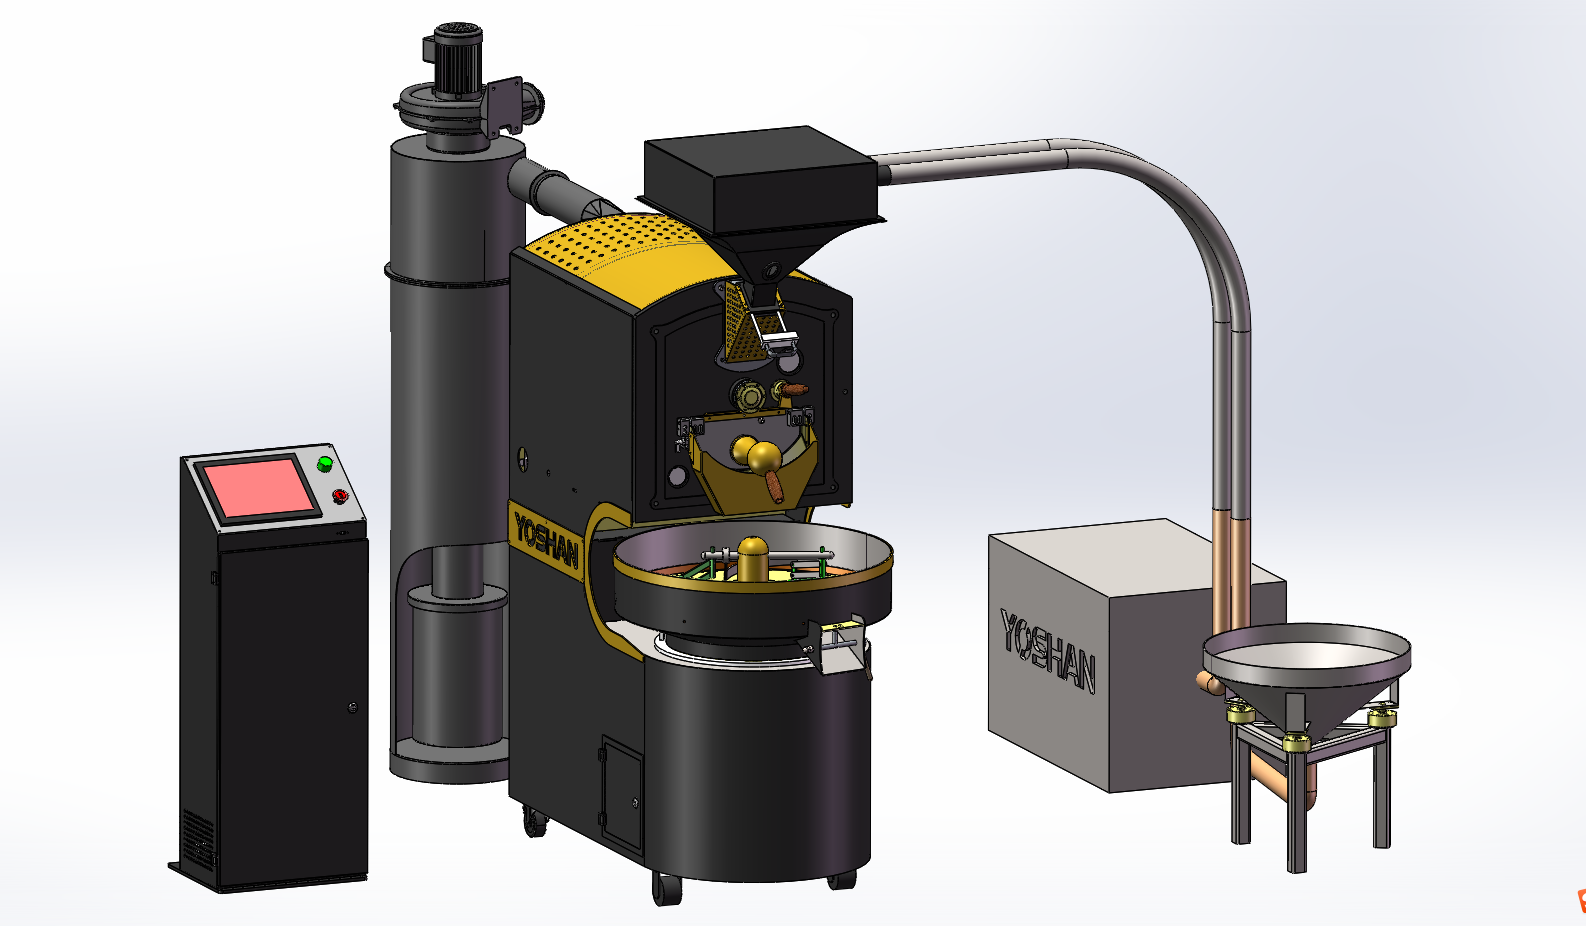 Giant G6 巨人G6master 高端智能咖啡烘焙机 PLC自动烘焙曲线复制运行  铸铁工艺